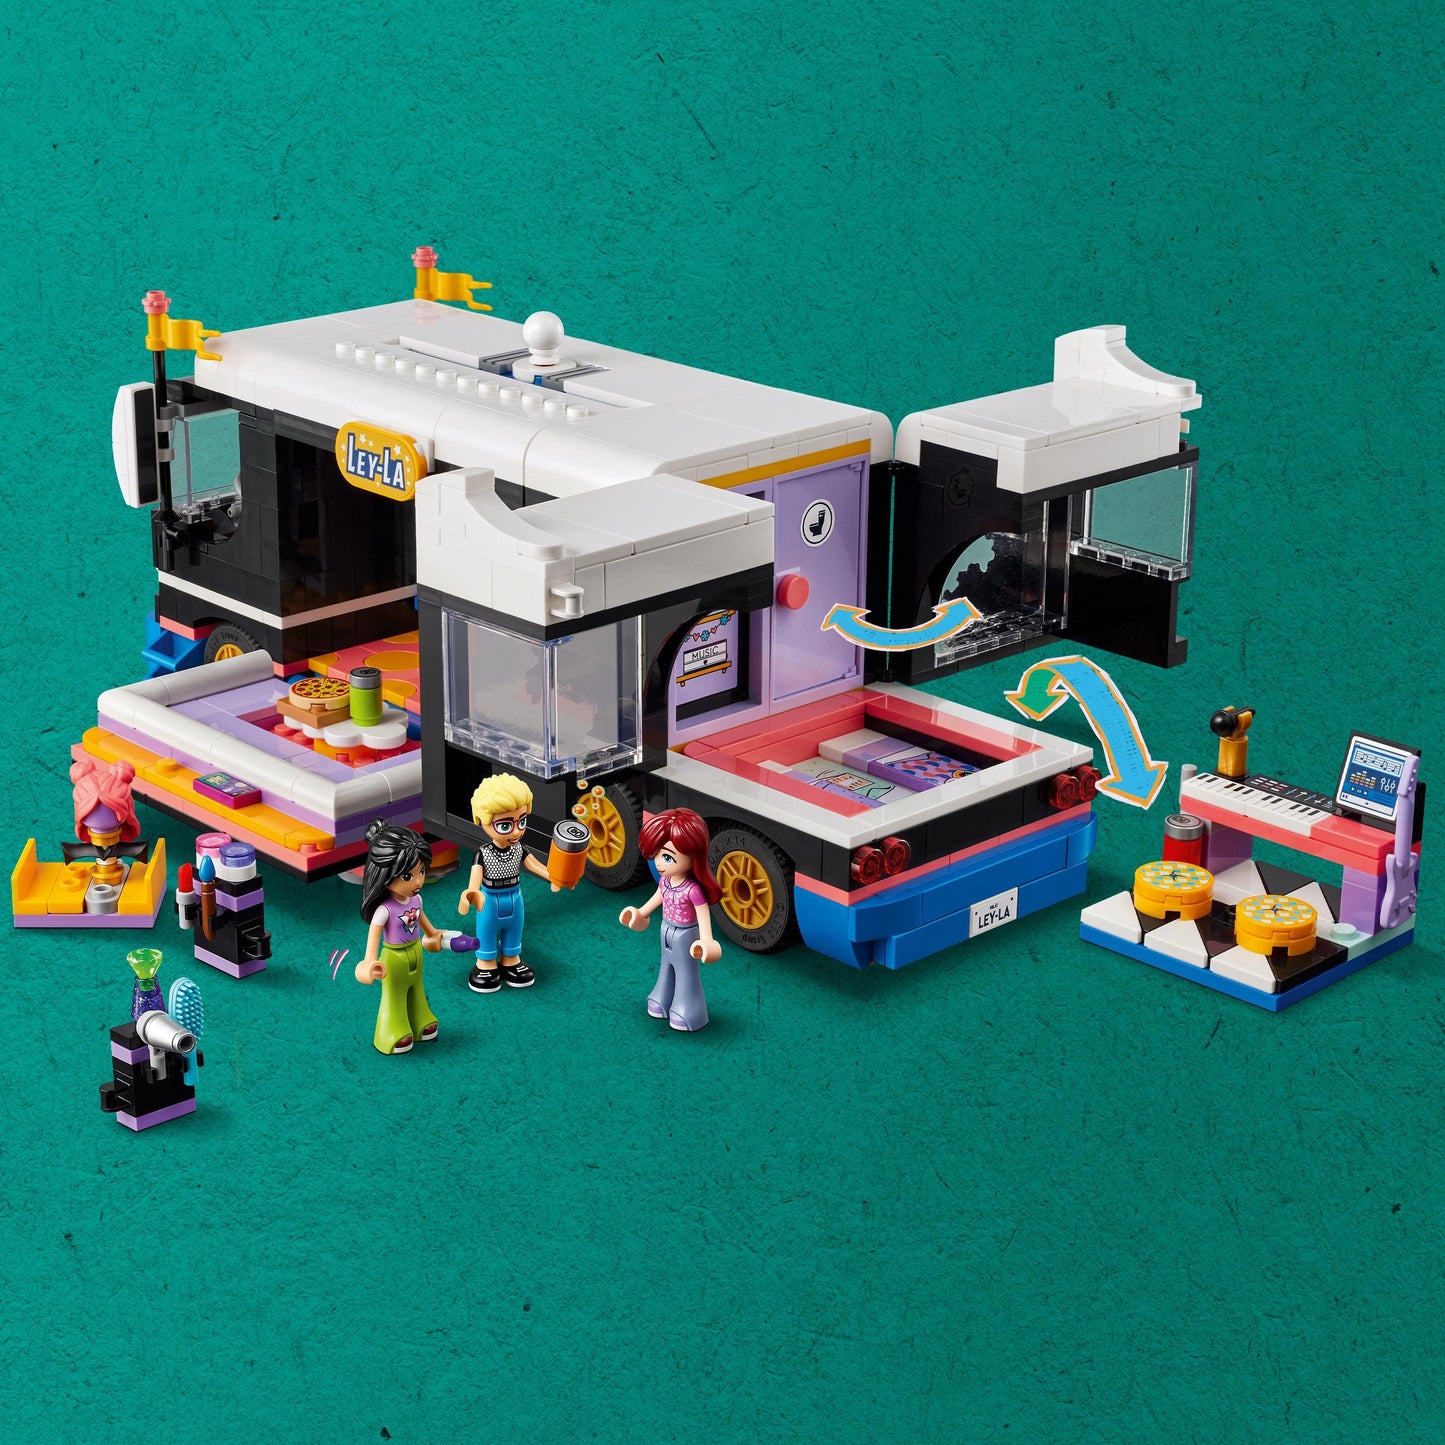 LEGO Pop ster muziek bus 42619 Friends LEGO FRIENDS @ 2TTOYS LEGO €. 71.99